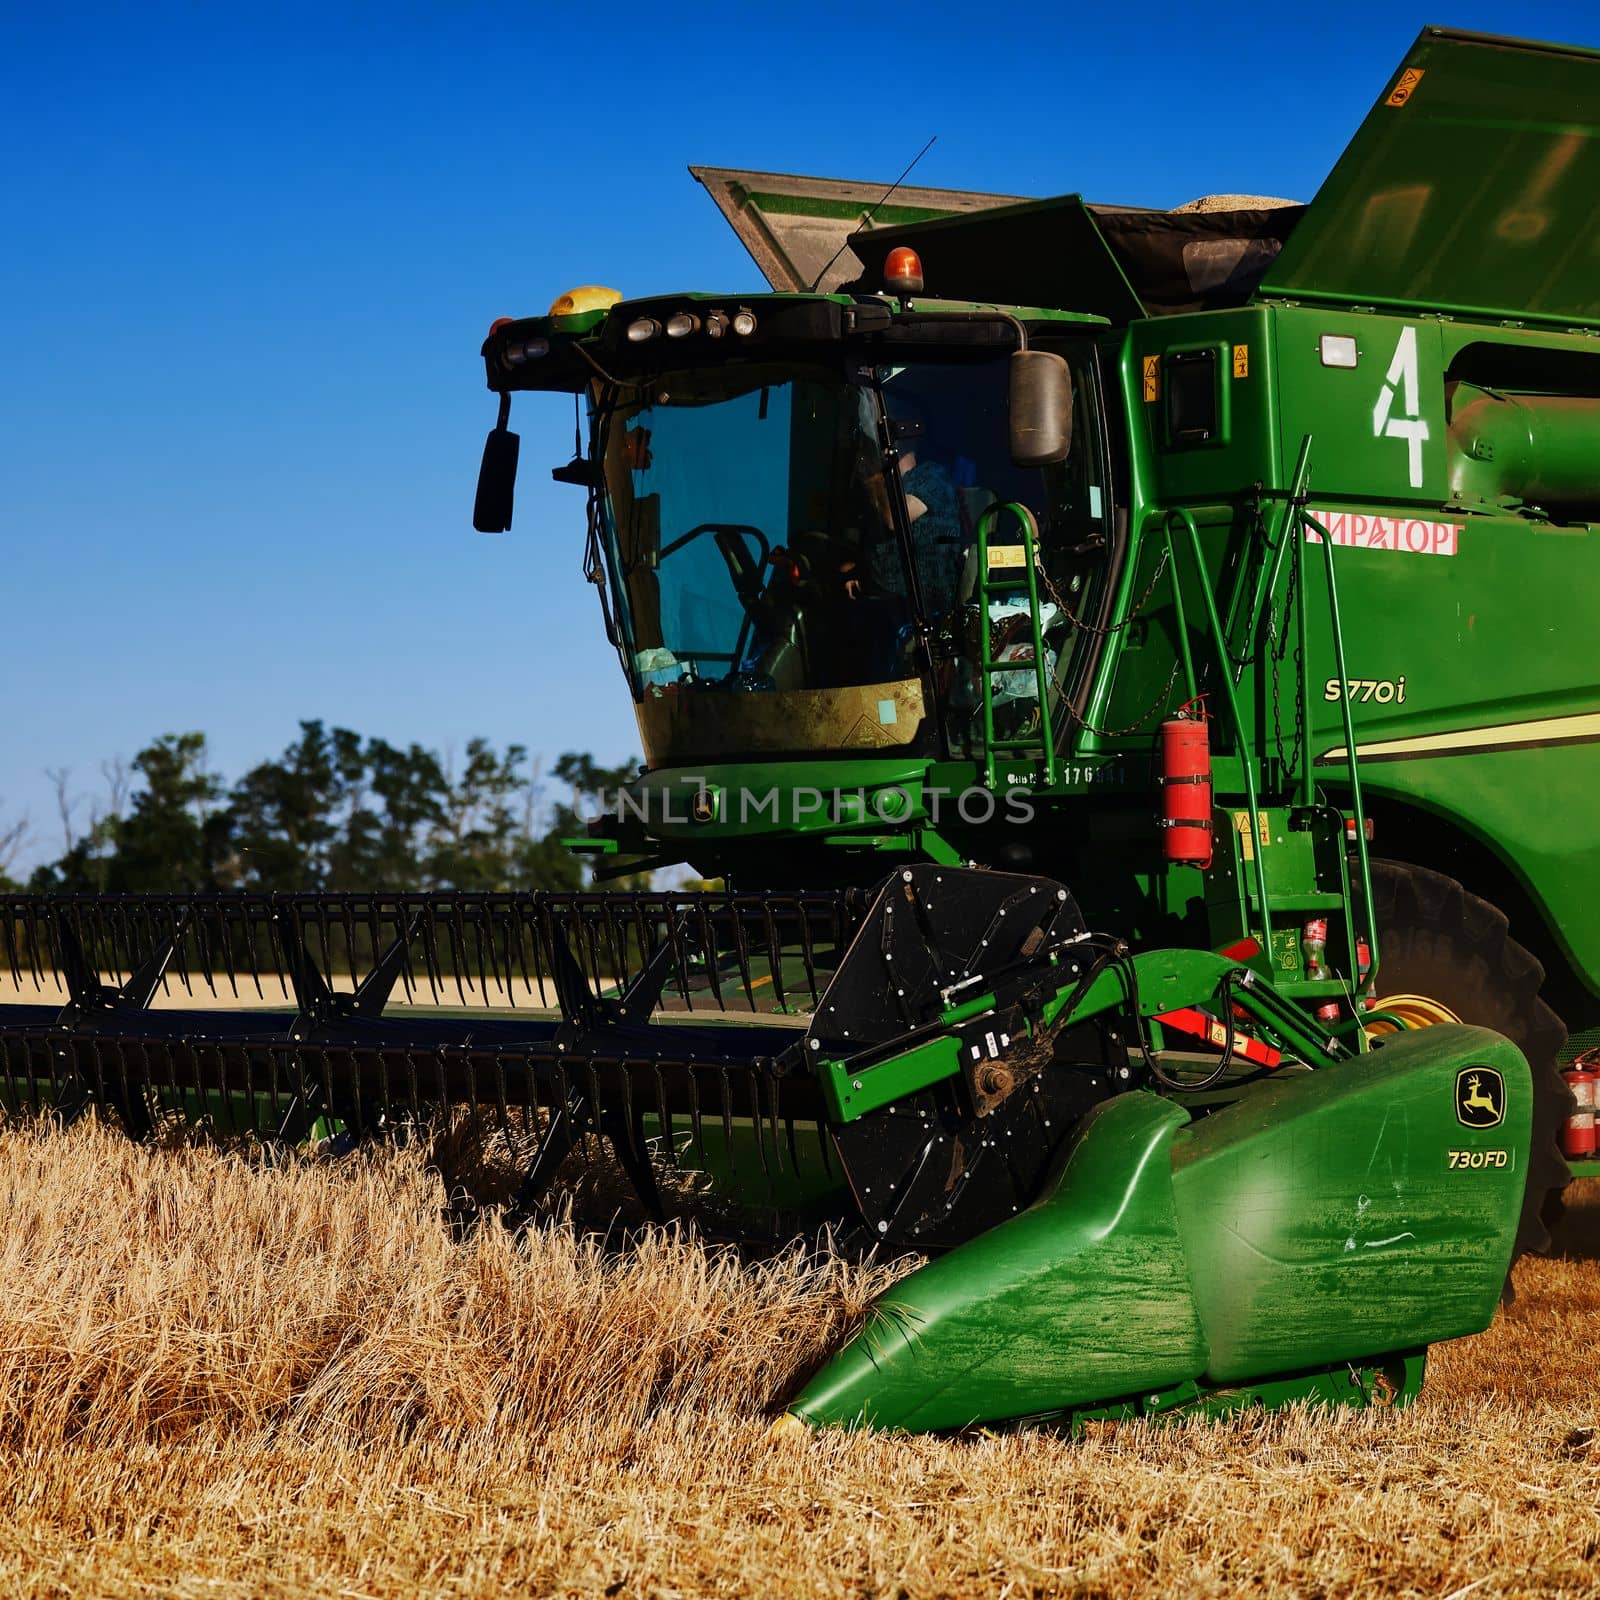 John Deere harvester works in the field. Combine Harvesting Wheat. Field field of cereals during harvesting. Modern equipment works. 07.07.22, Rostov region, Russia by EvgeniyQW